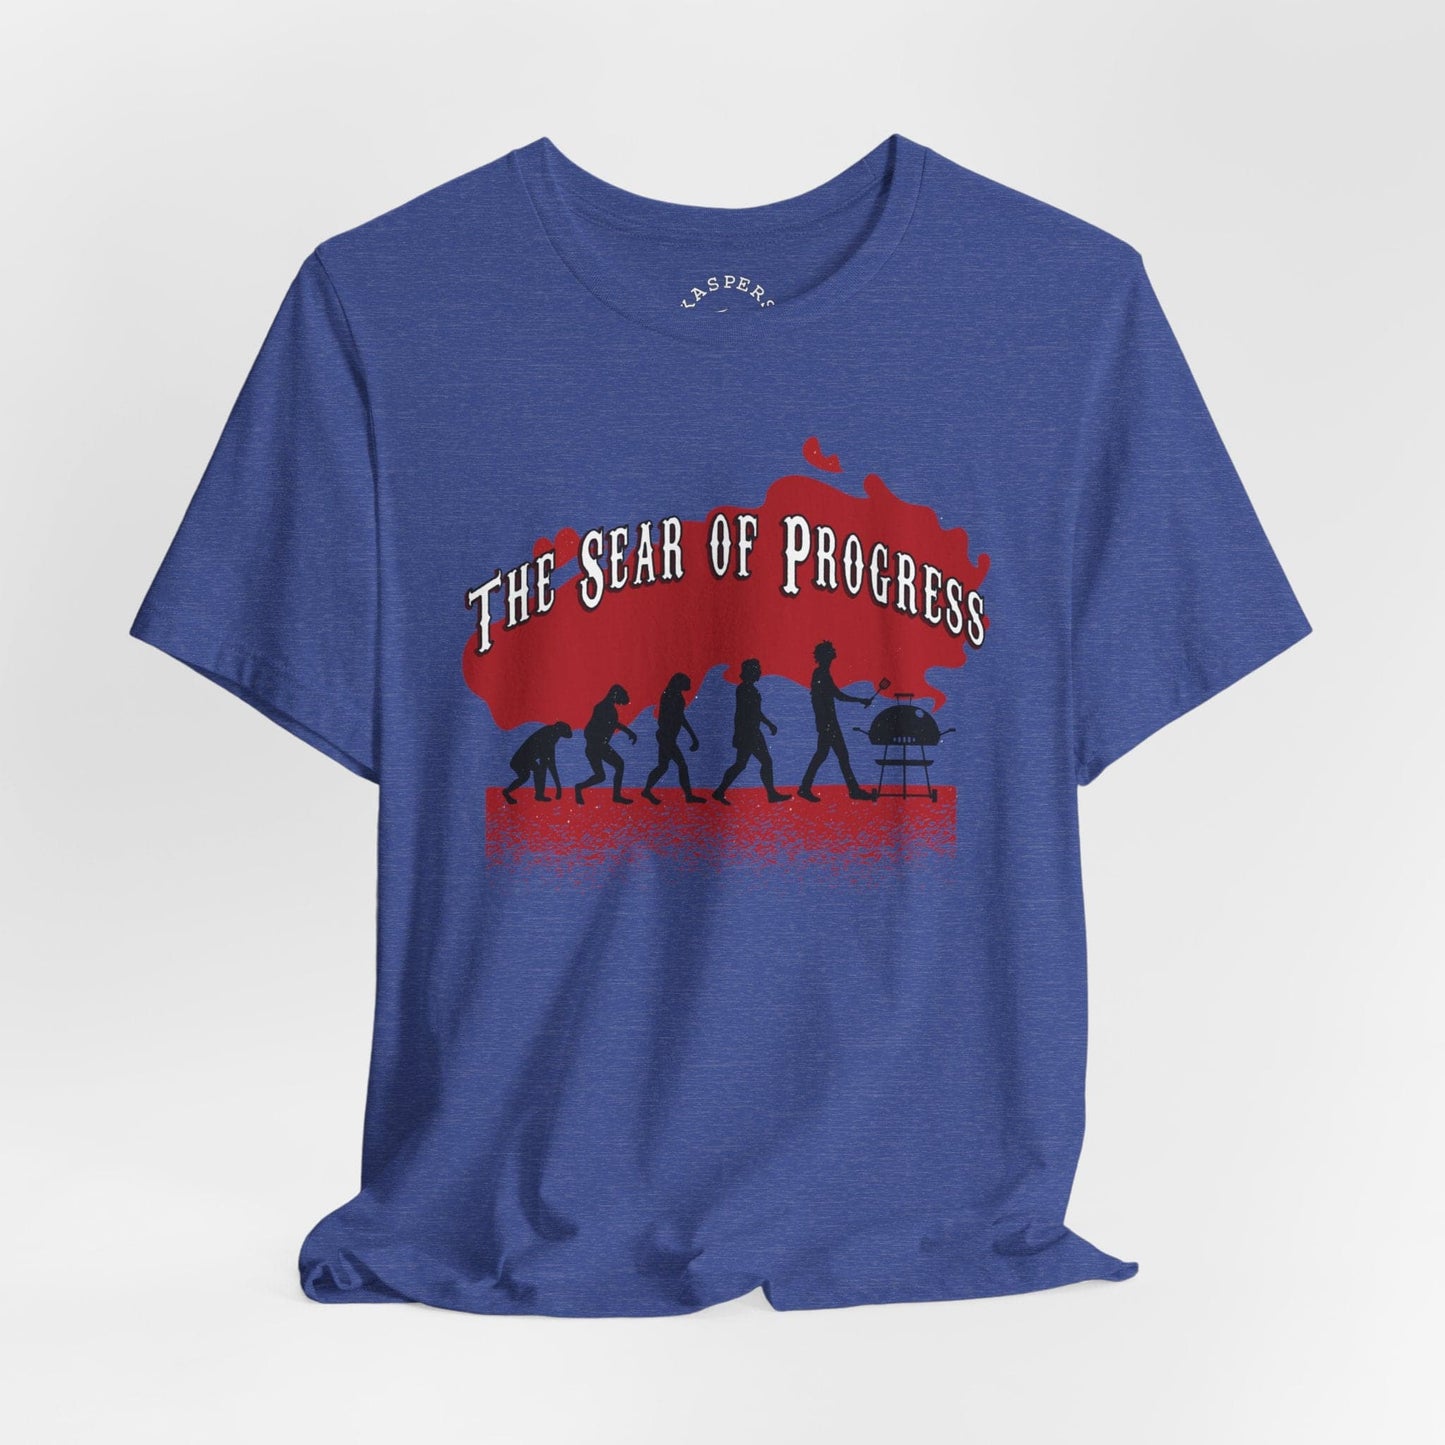 The Sear of Progress T-Shirt